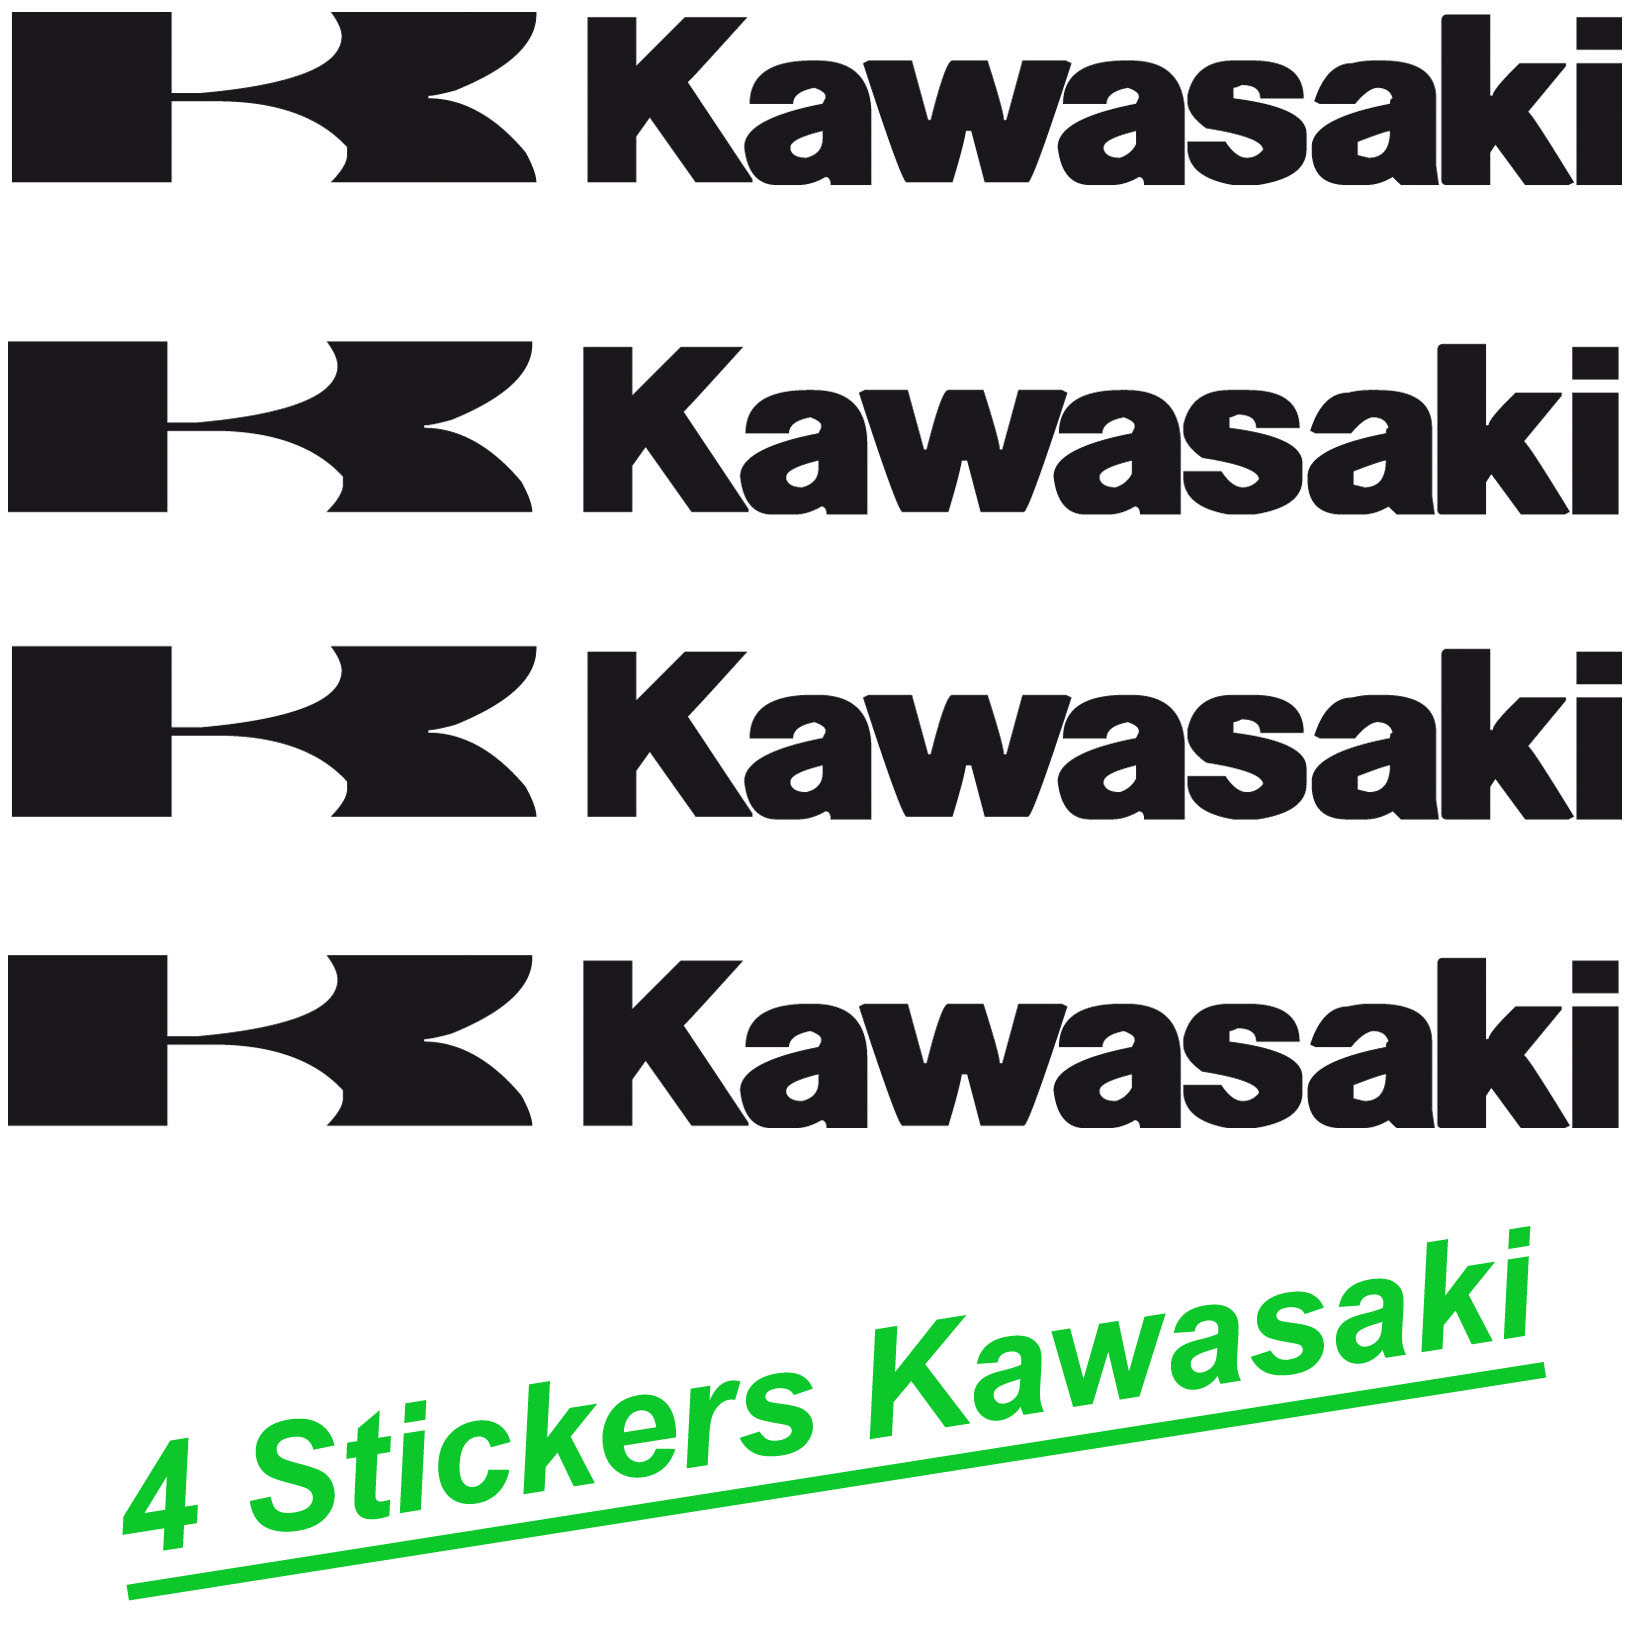 4 STICKERS KAWASAKI